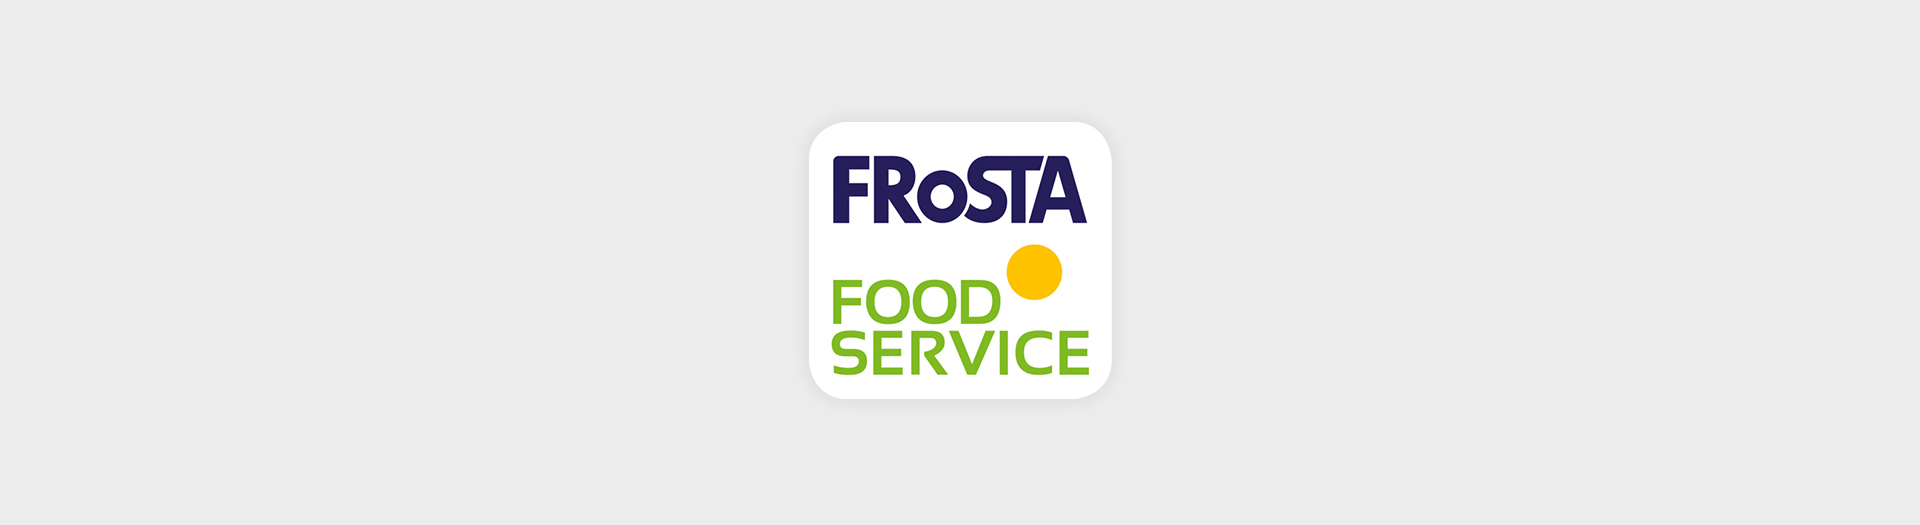 Newsletter FRoSTA Food Service